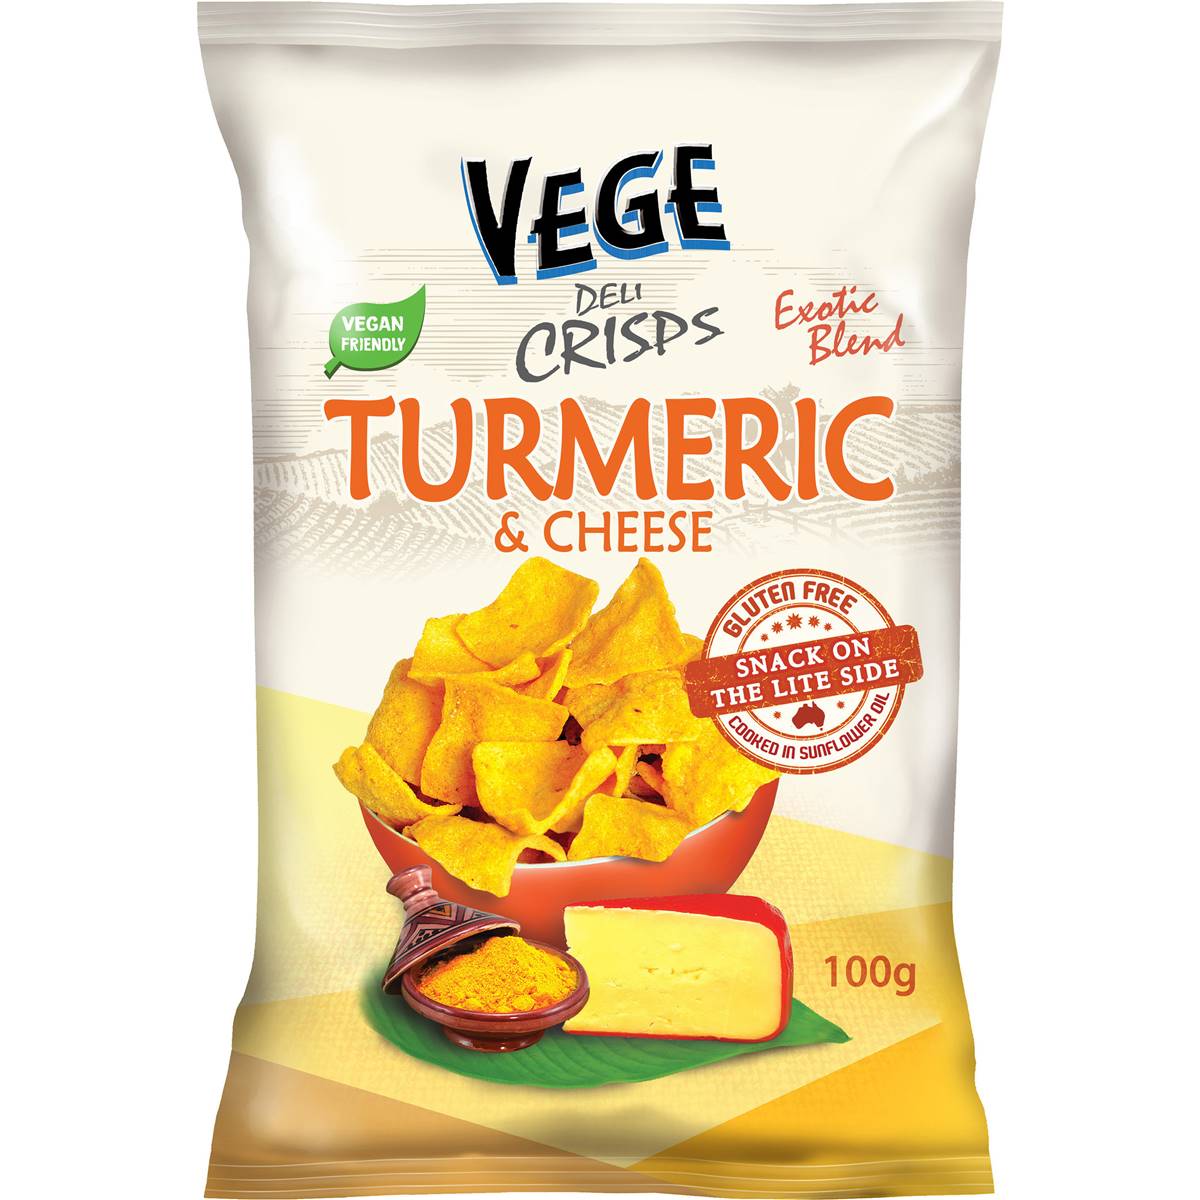 Calories in Vege Chips Deli Crisps Turmeric & Cheese